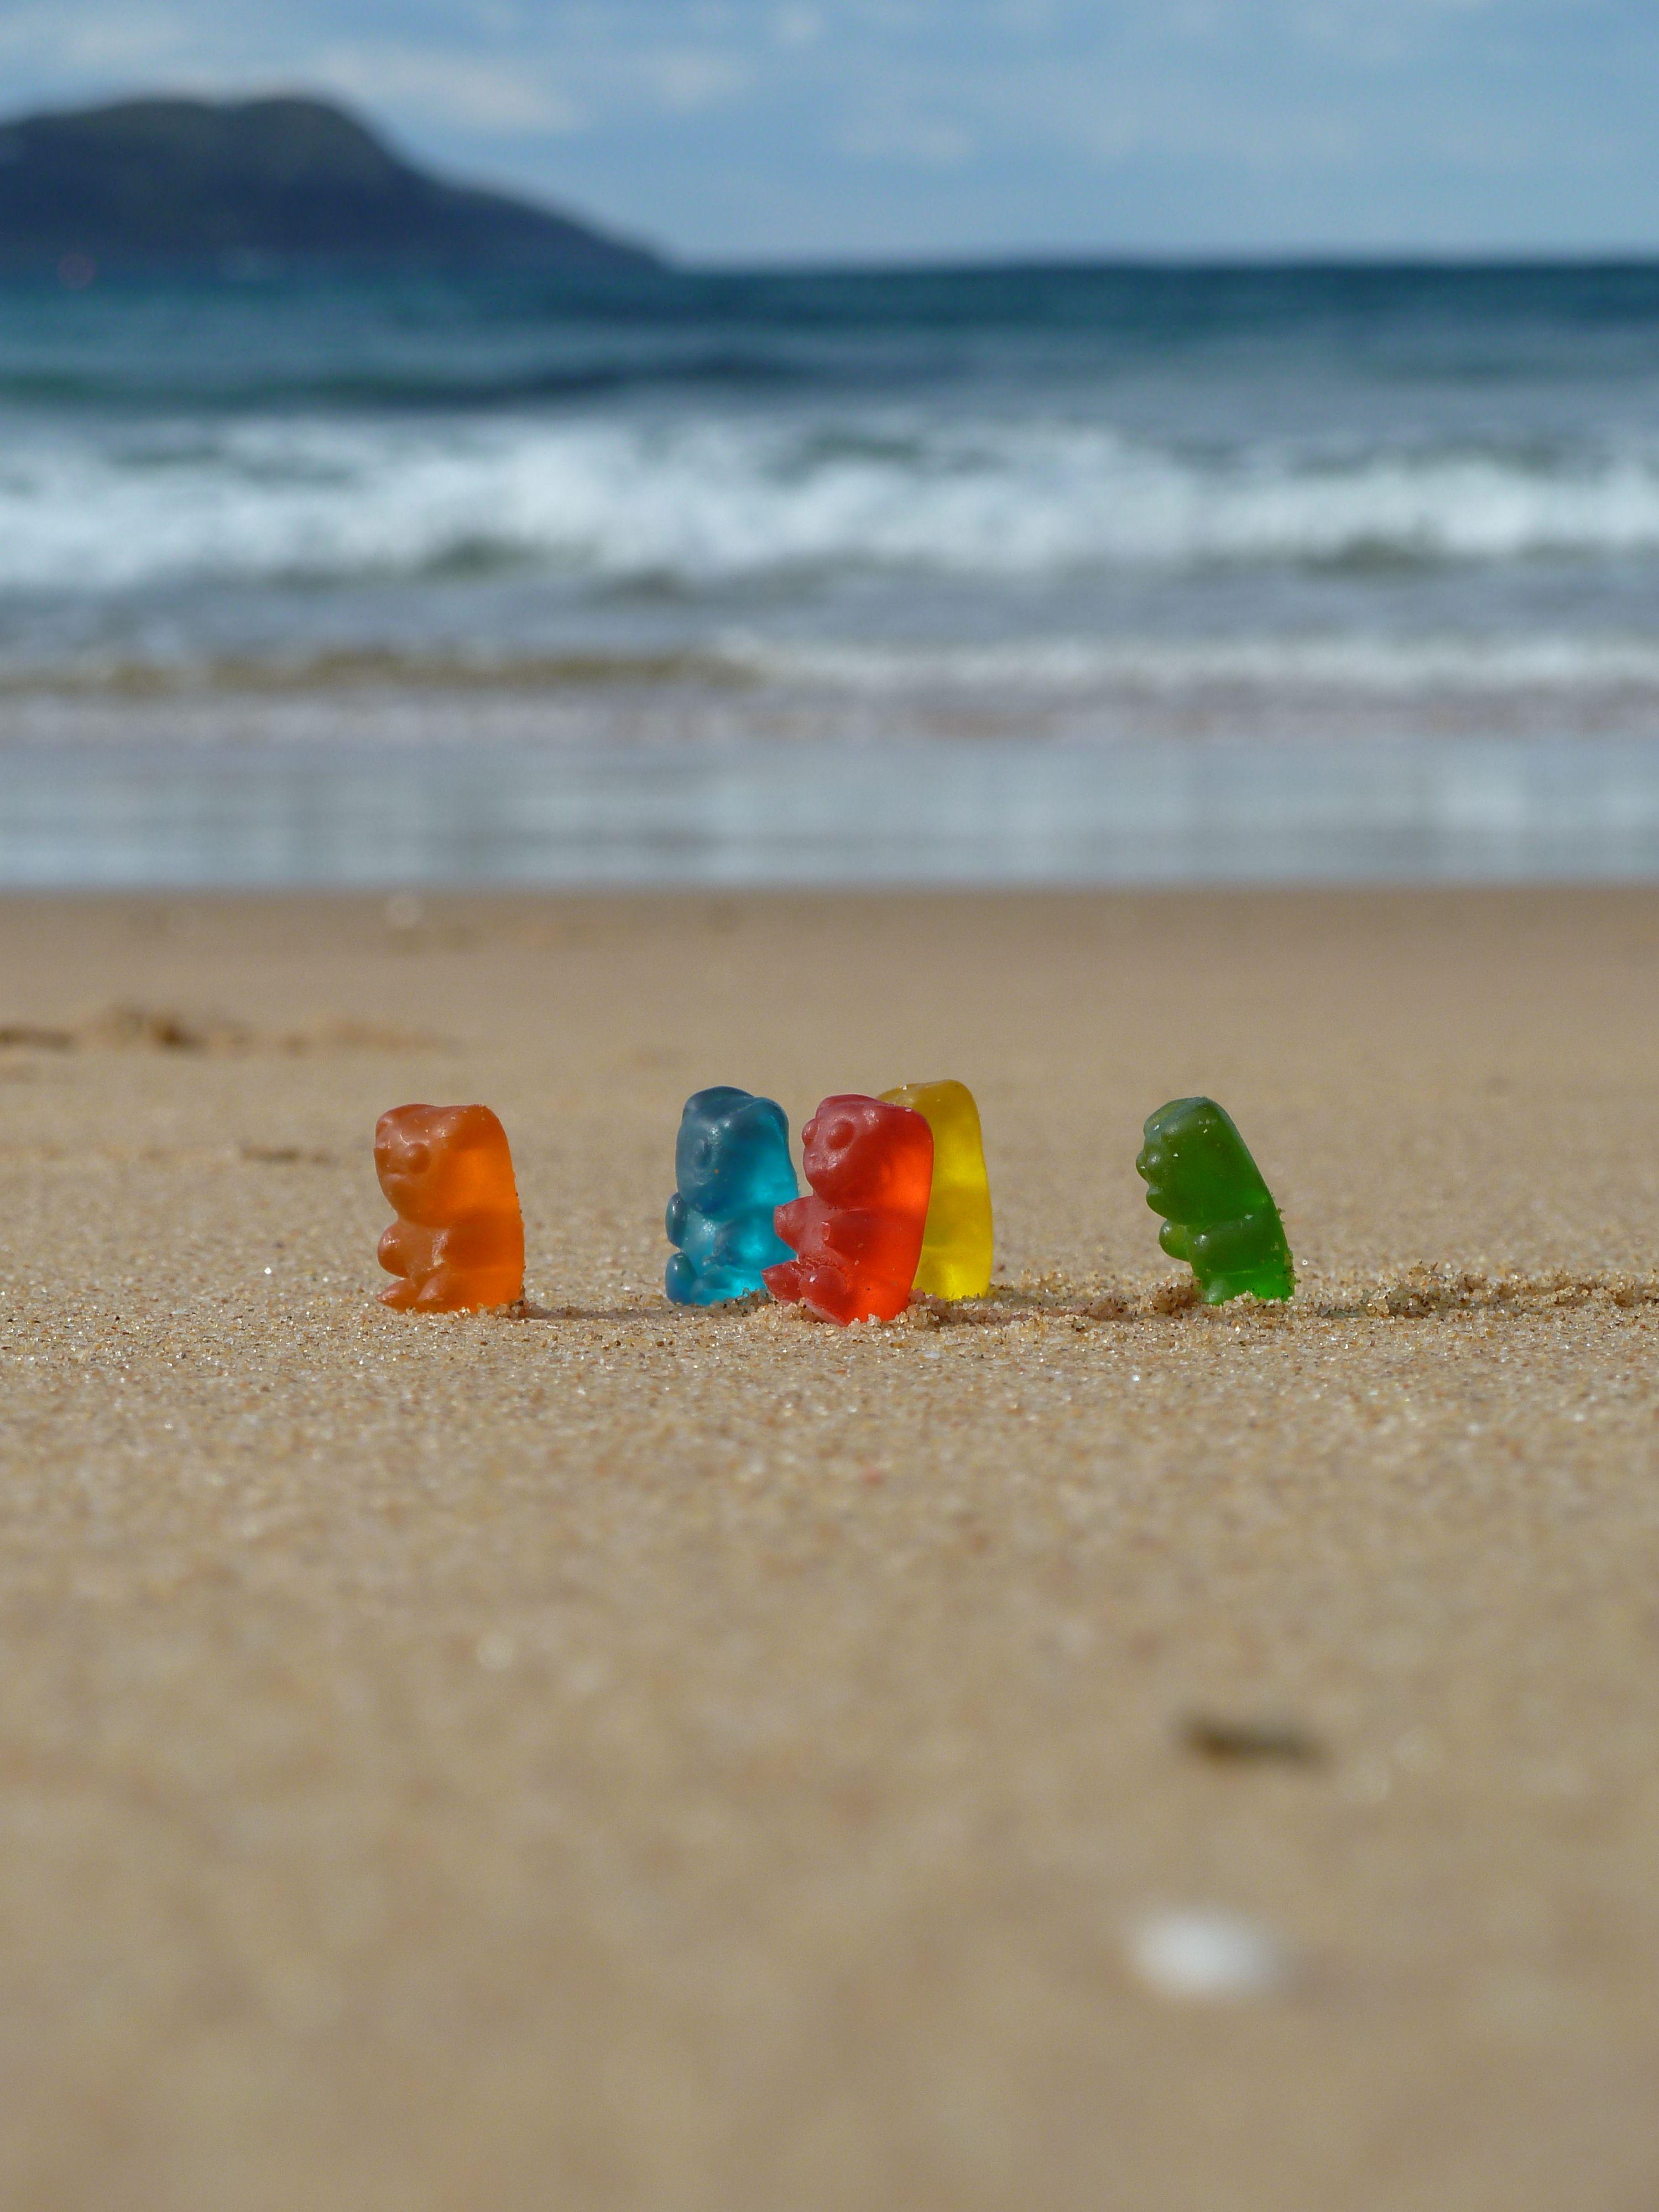 Gummi Bears go walking. Gummy bears, Haribo gummy bears, Gummy